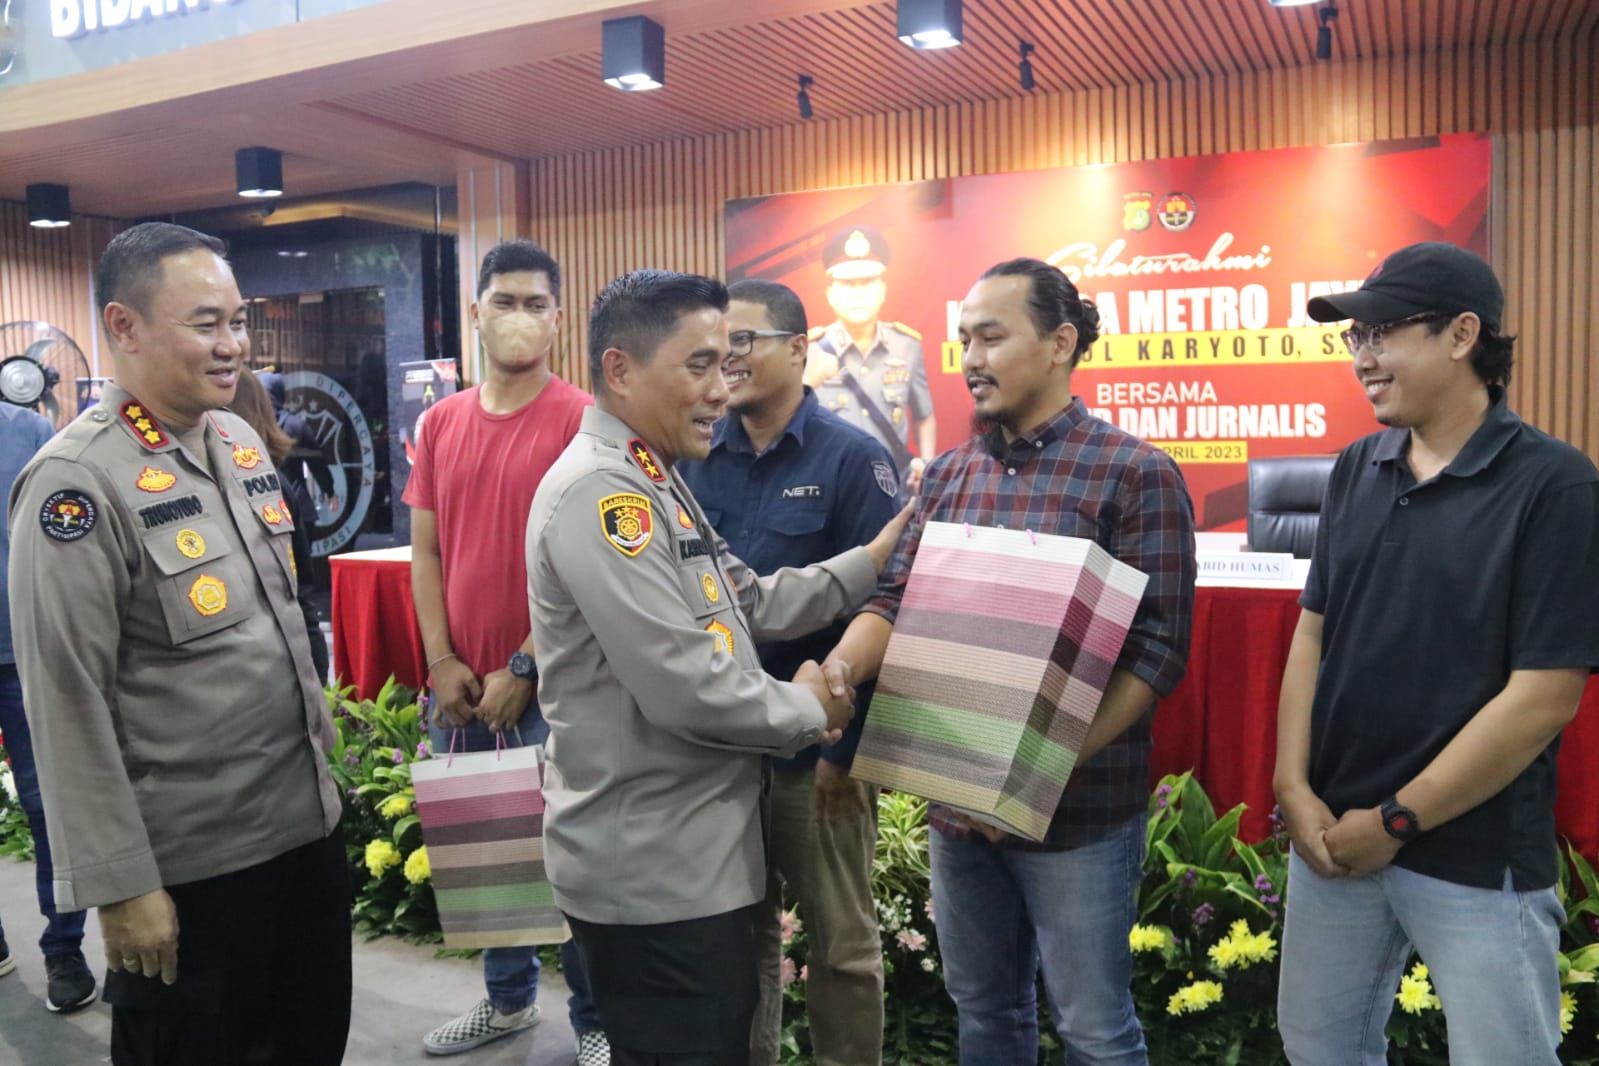 Perkuat Sinergi, Kapolda Metro Jaya Silahturahmi Bersama Media dan Wartawan 